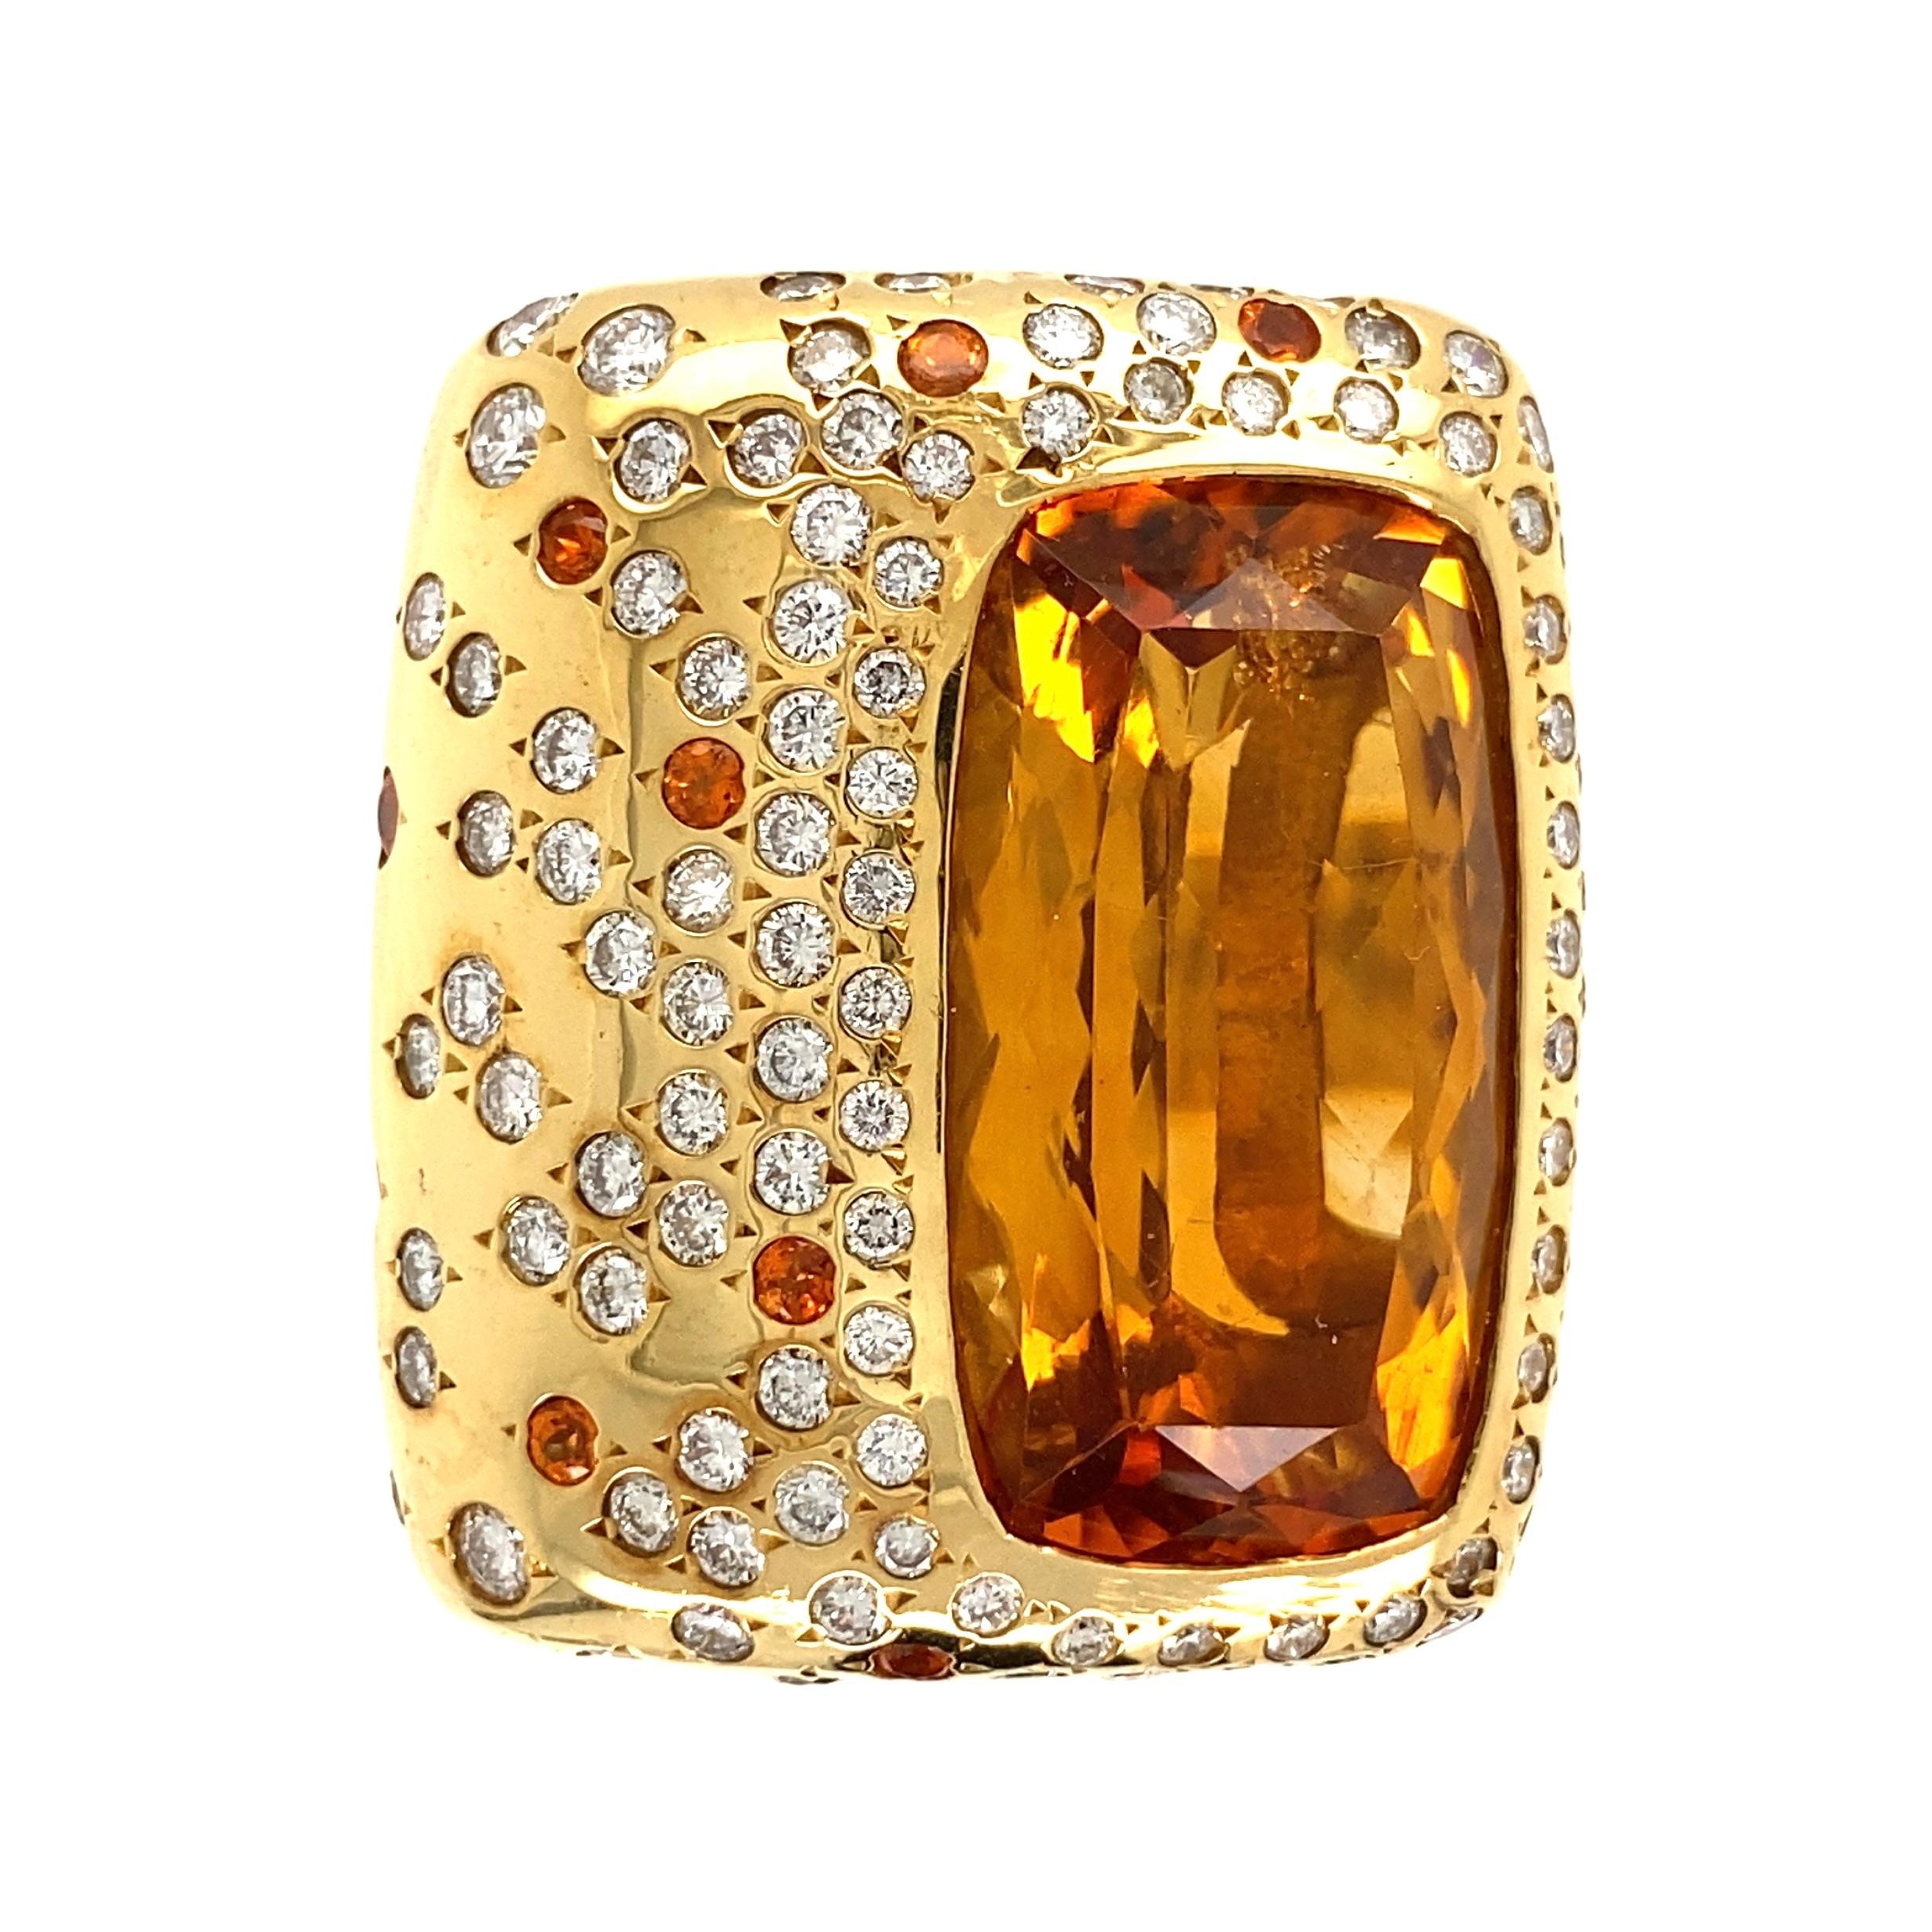 13.50 Carat Citrine Diamond and Spessartite Garnet Gold Ring Estate Fine Jewelry For Sale